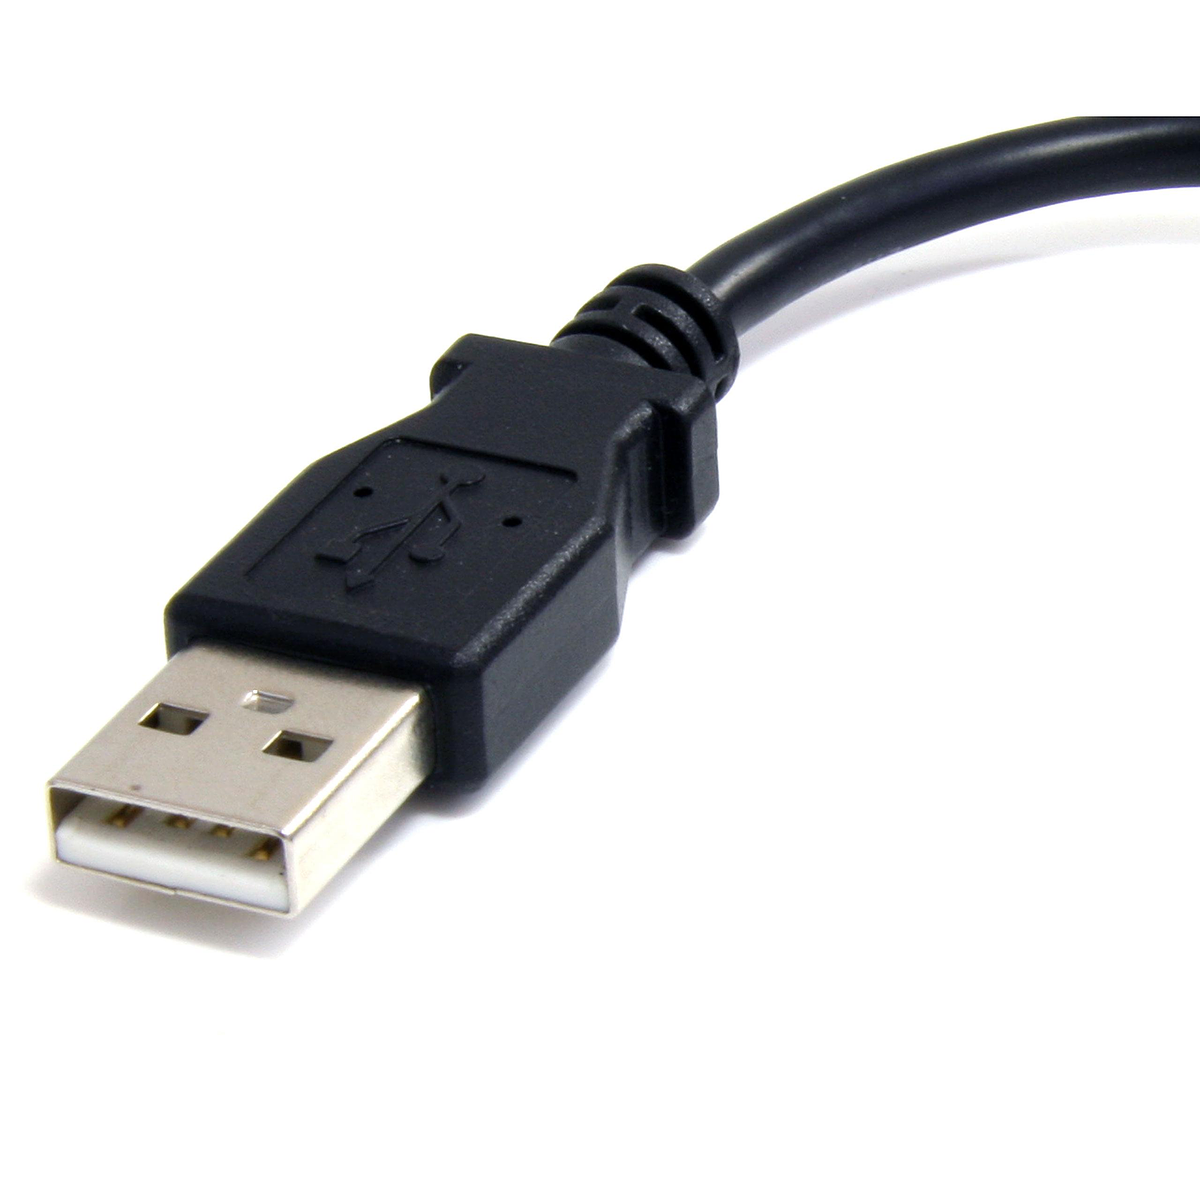 Pack 2 Mandos USB SuperNintendo para Macbook & Pc + 1000 Juegos I Oechsle -  Oechsle